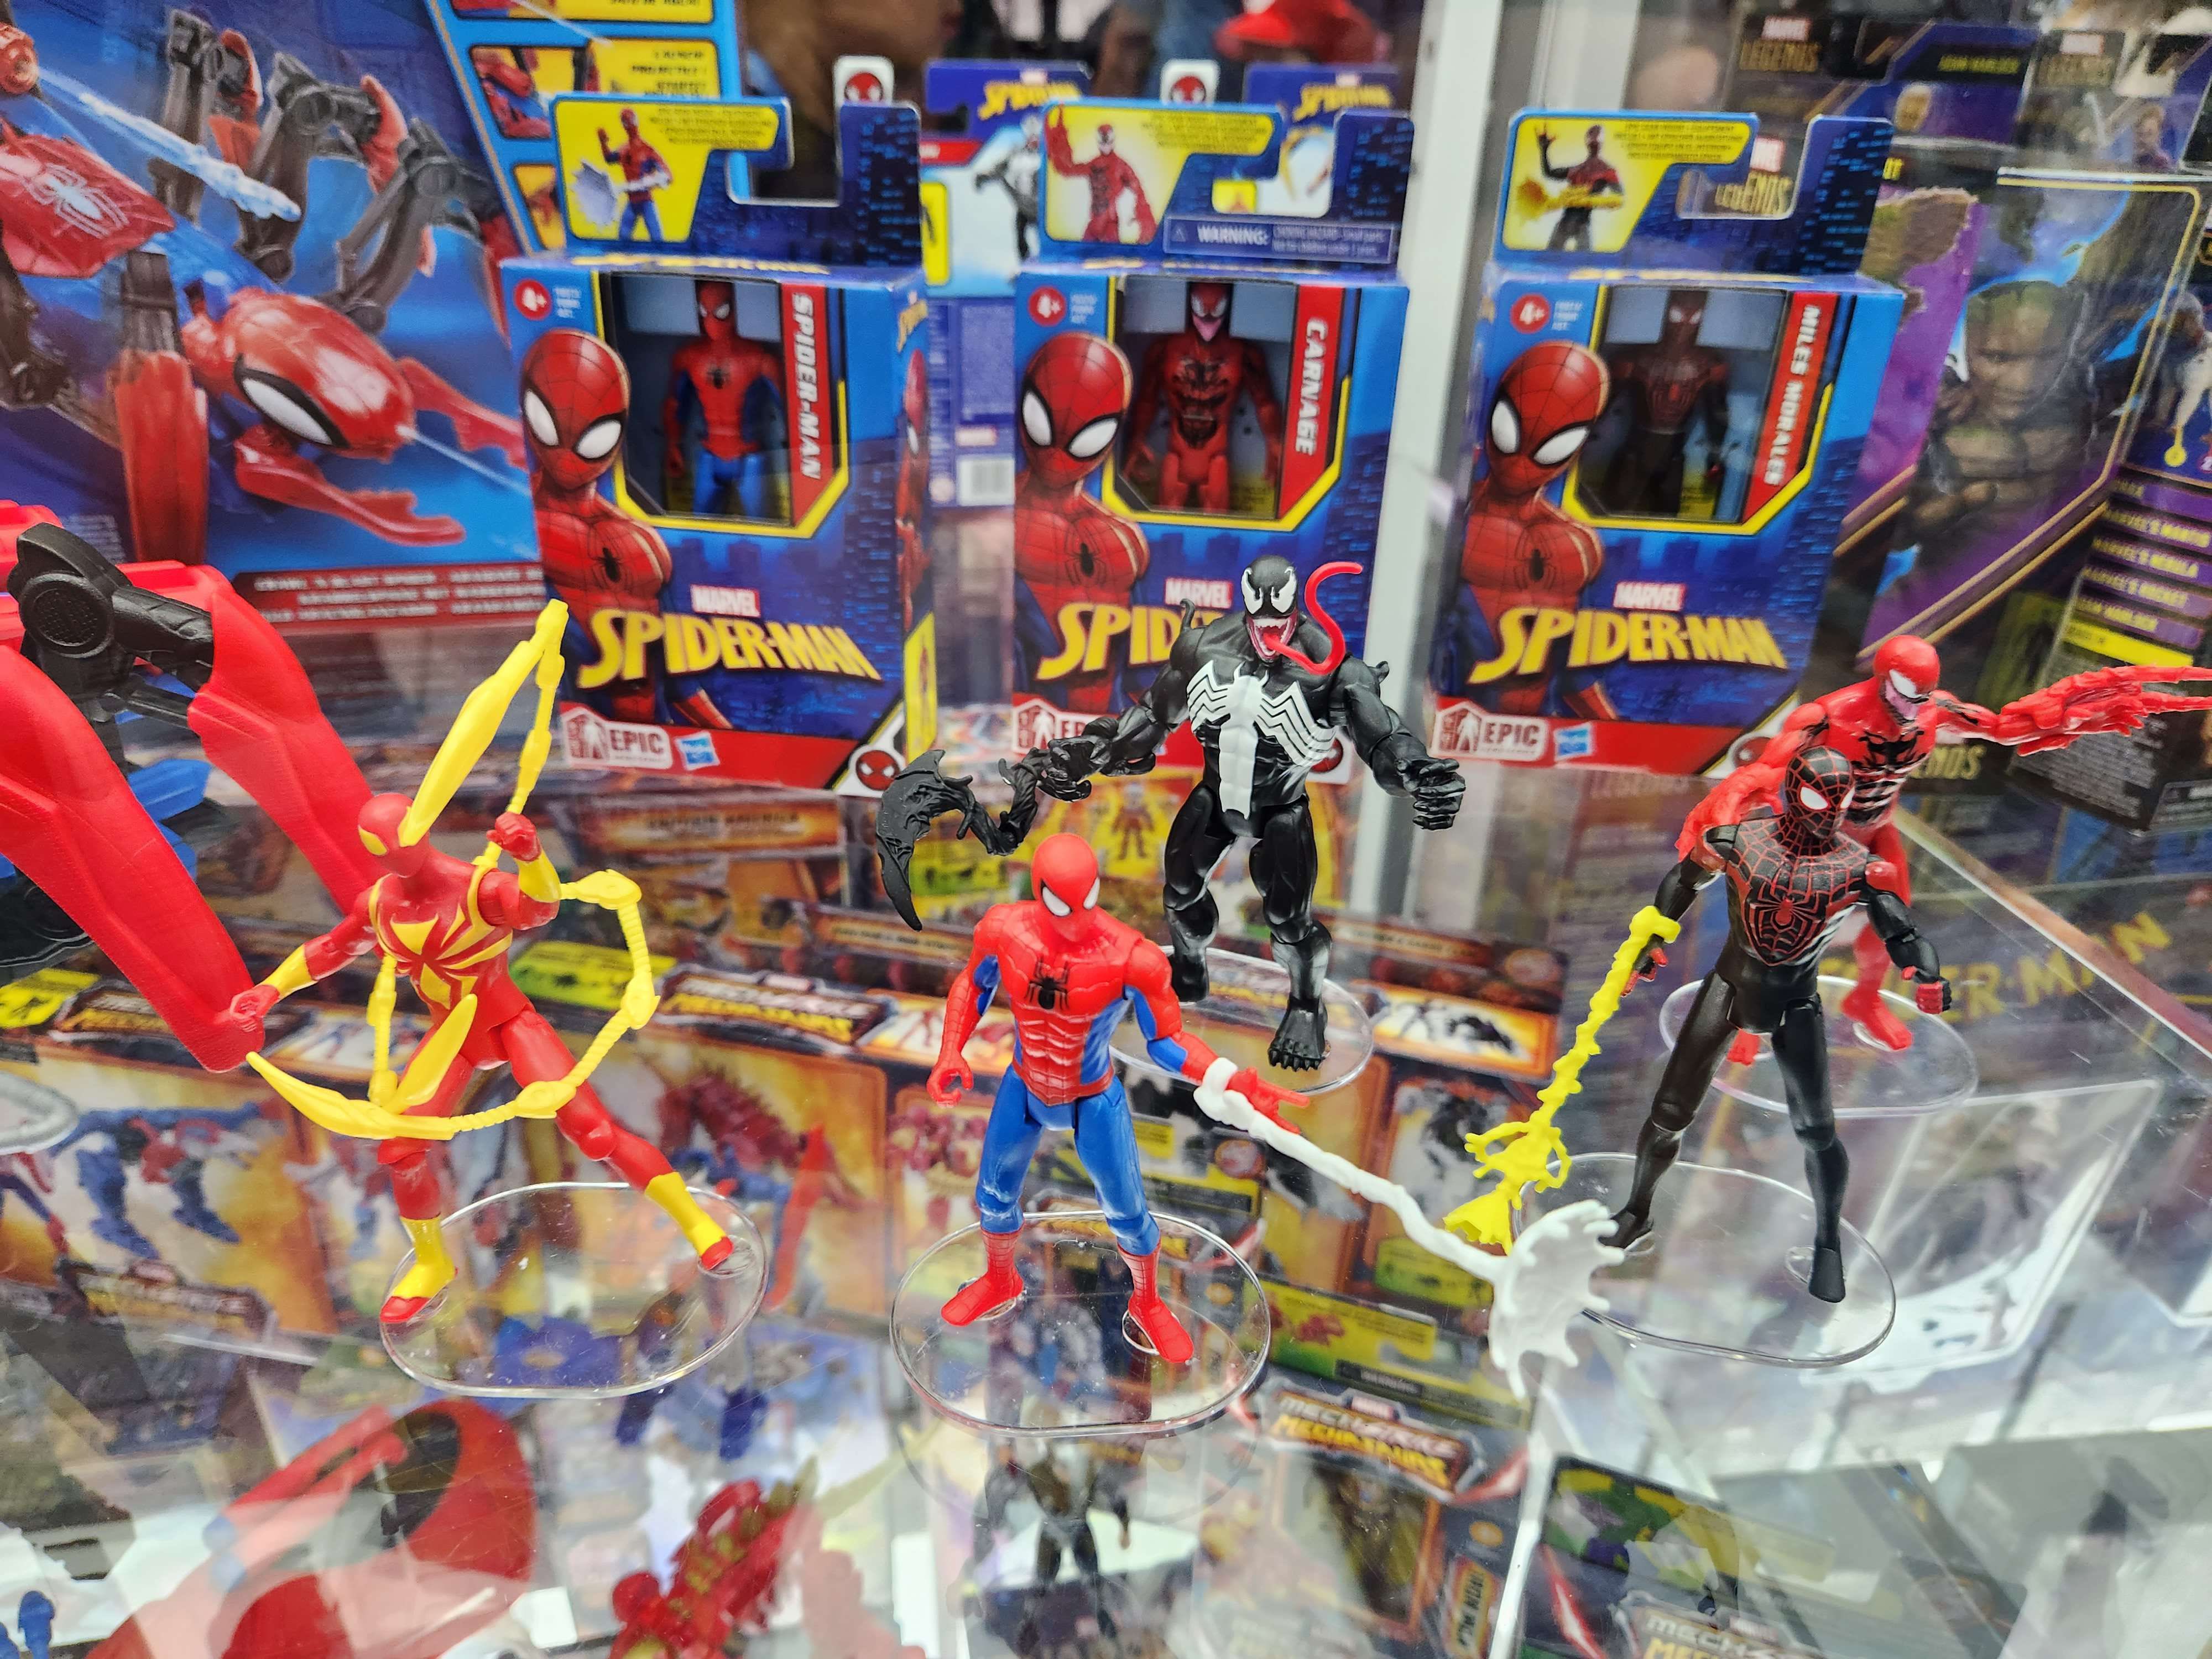 Hasbro Marvel Epic Hero Series Spider-Man Miles Morales 4-in